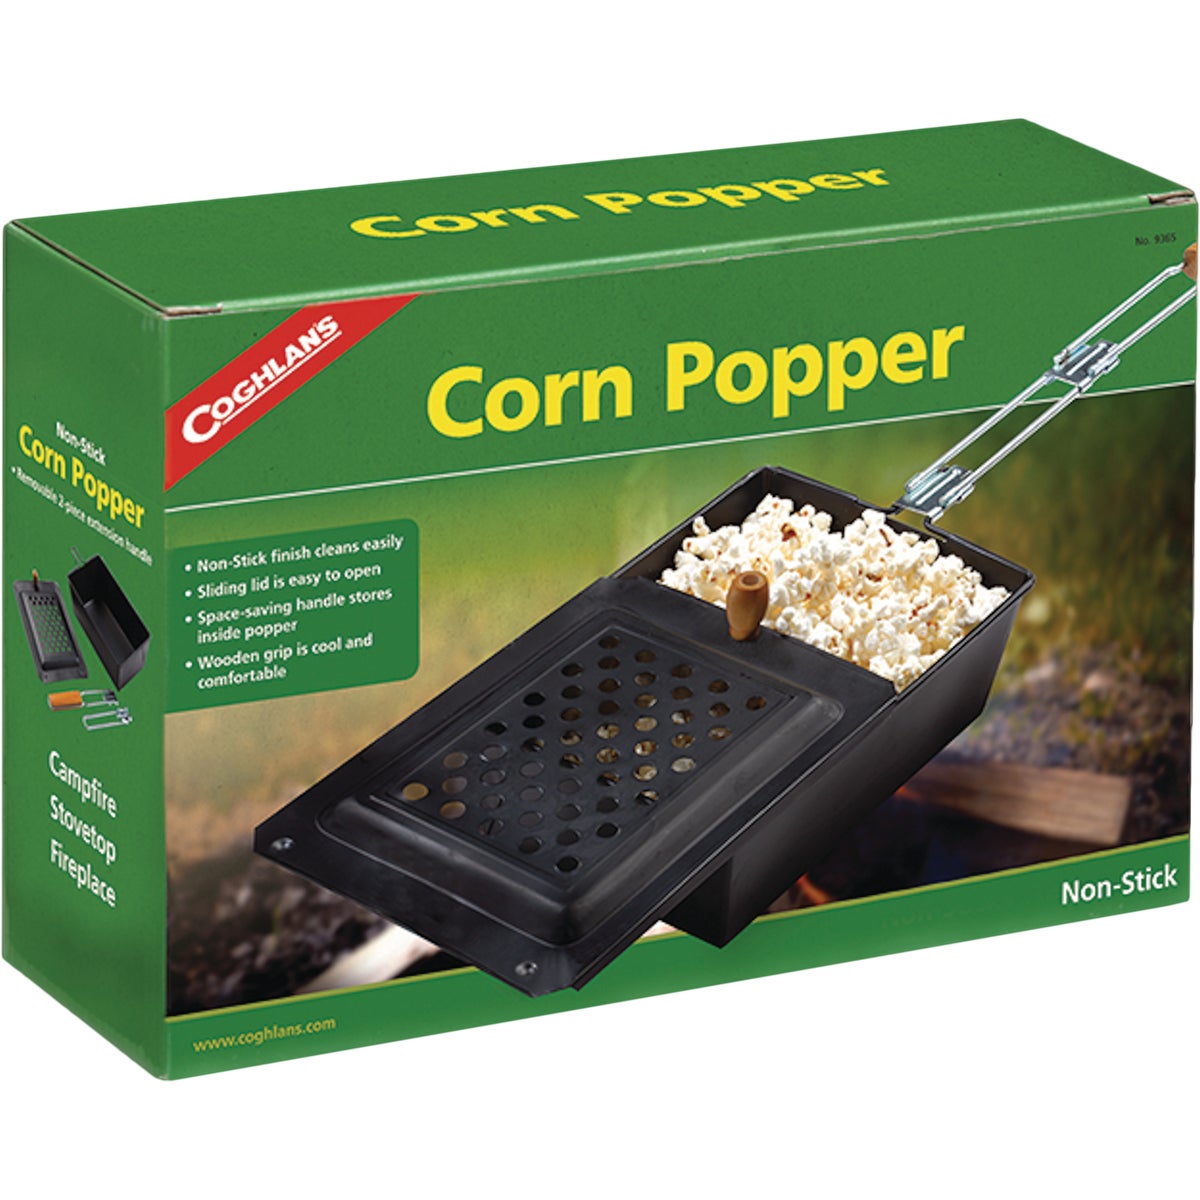 Coghlans 2 Qt. Non-Stick Popcorn Popper